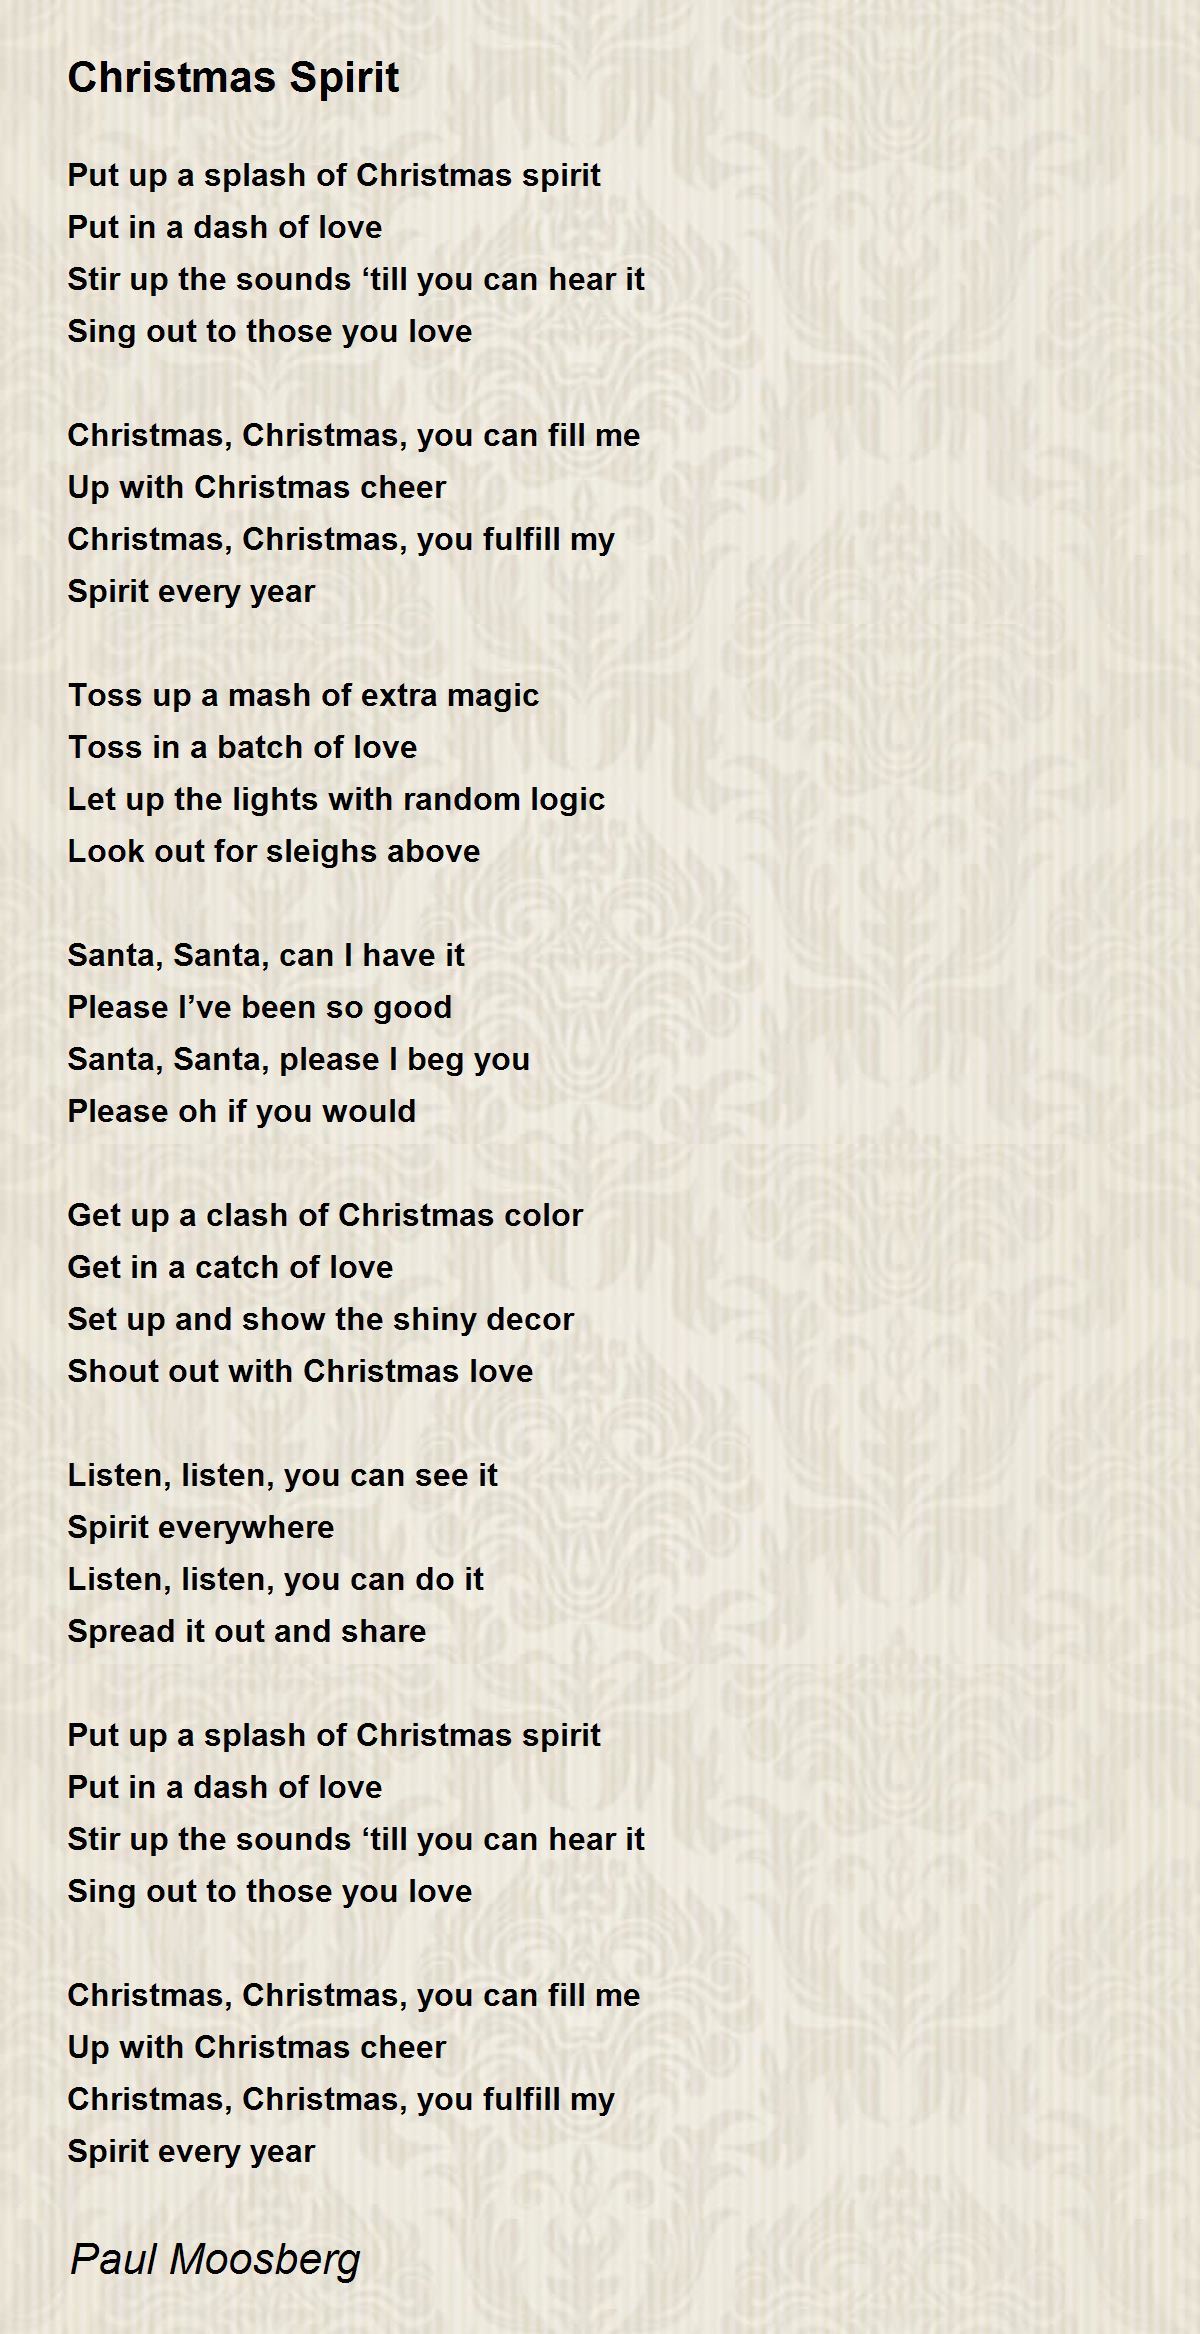 Christmas Spirit - Christmas Spirit Poem by Paul Moosberg